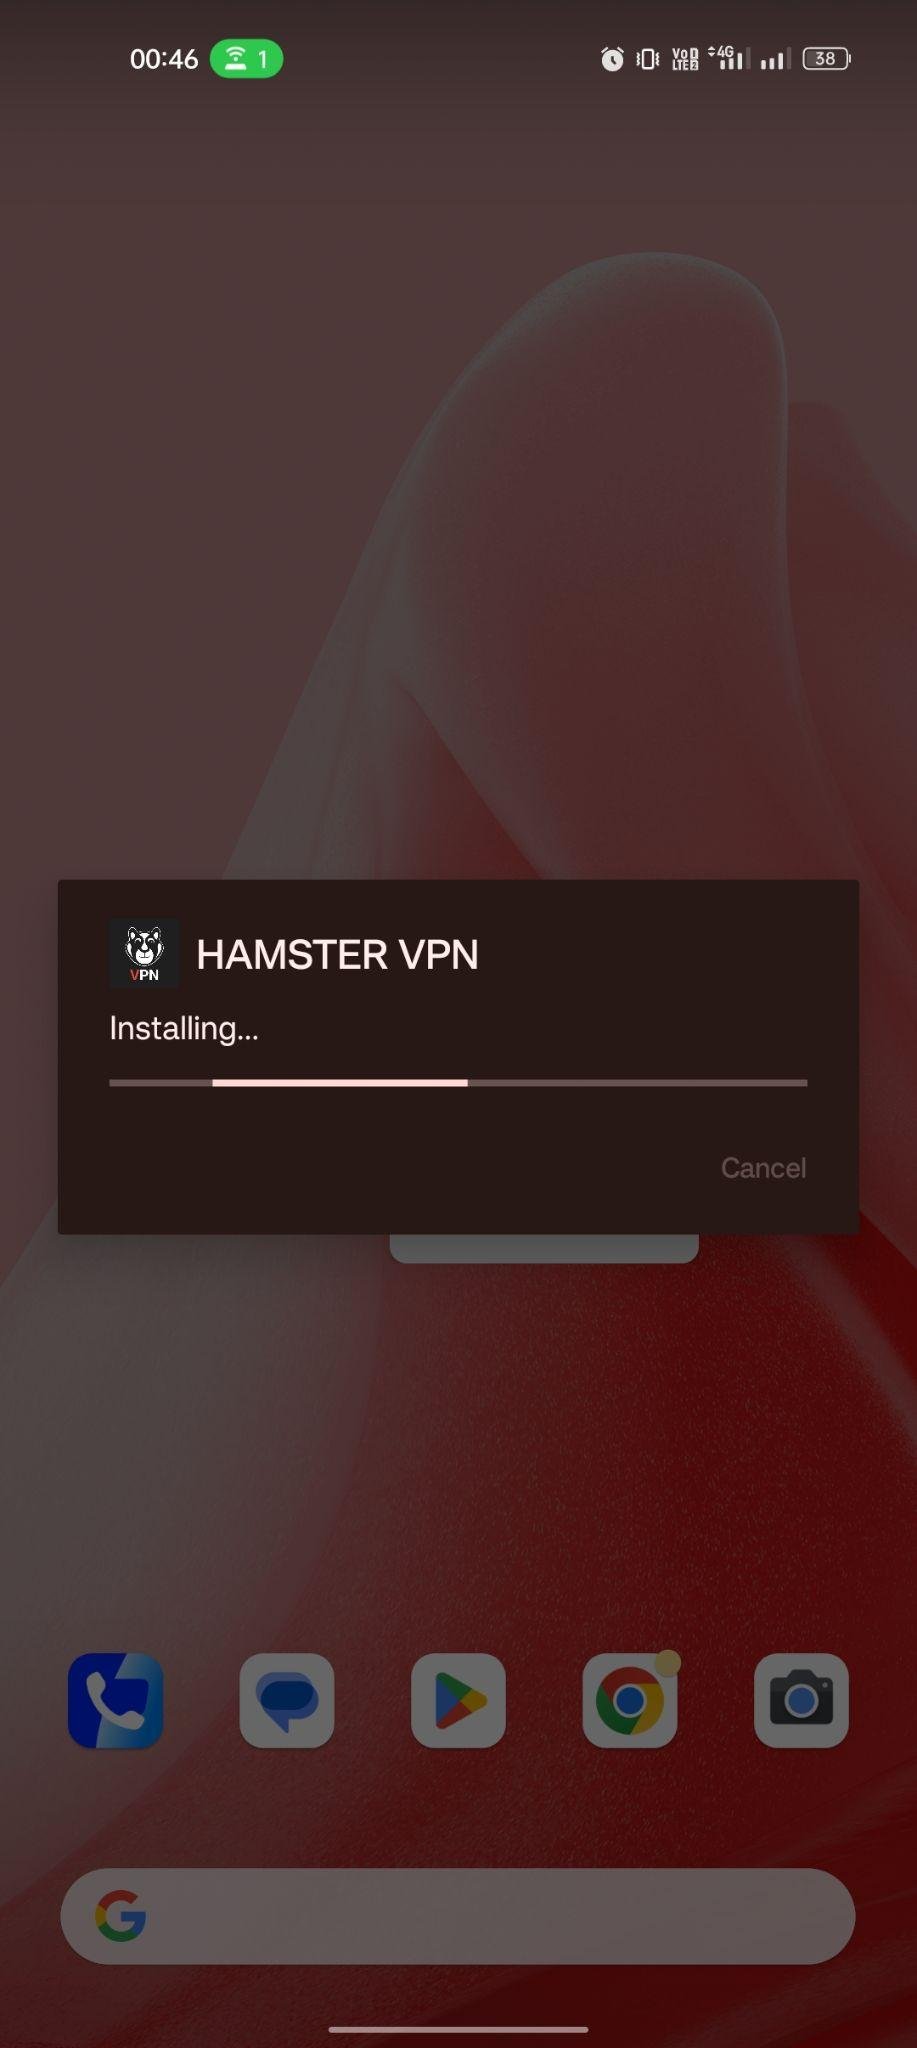 Hamster VPN apk installing